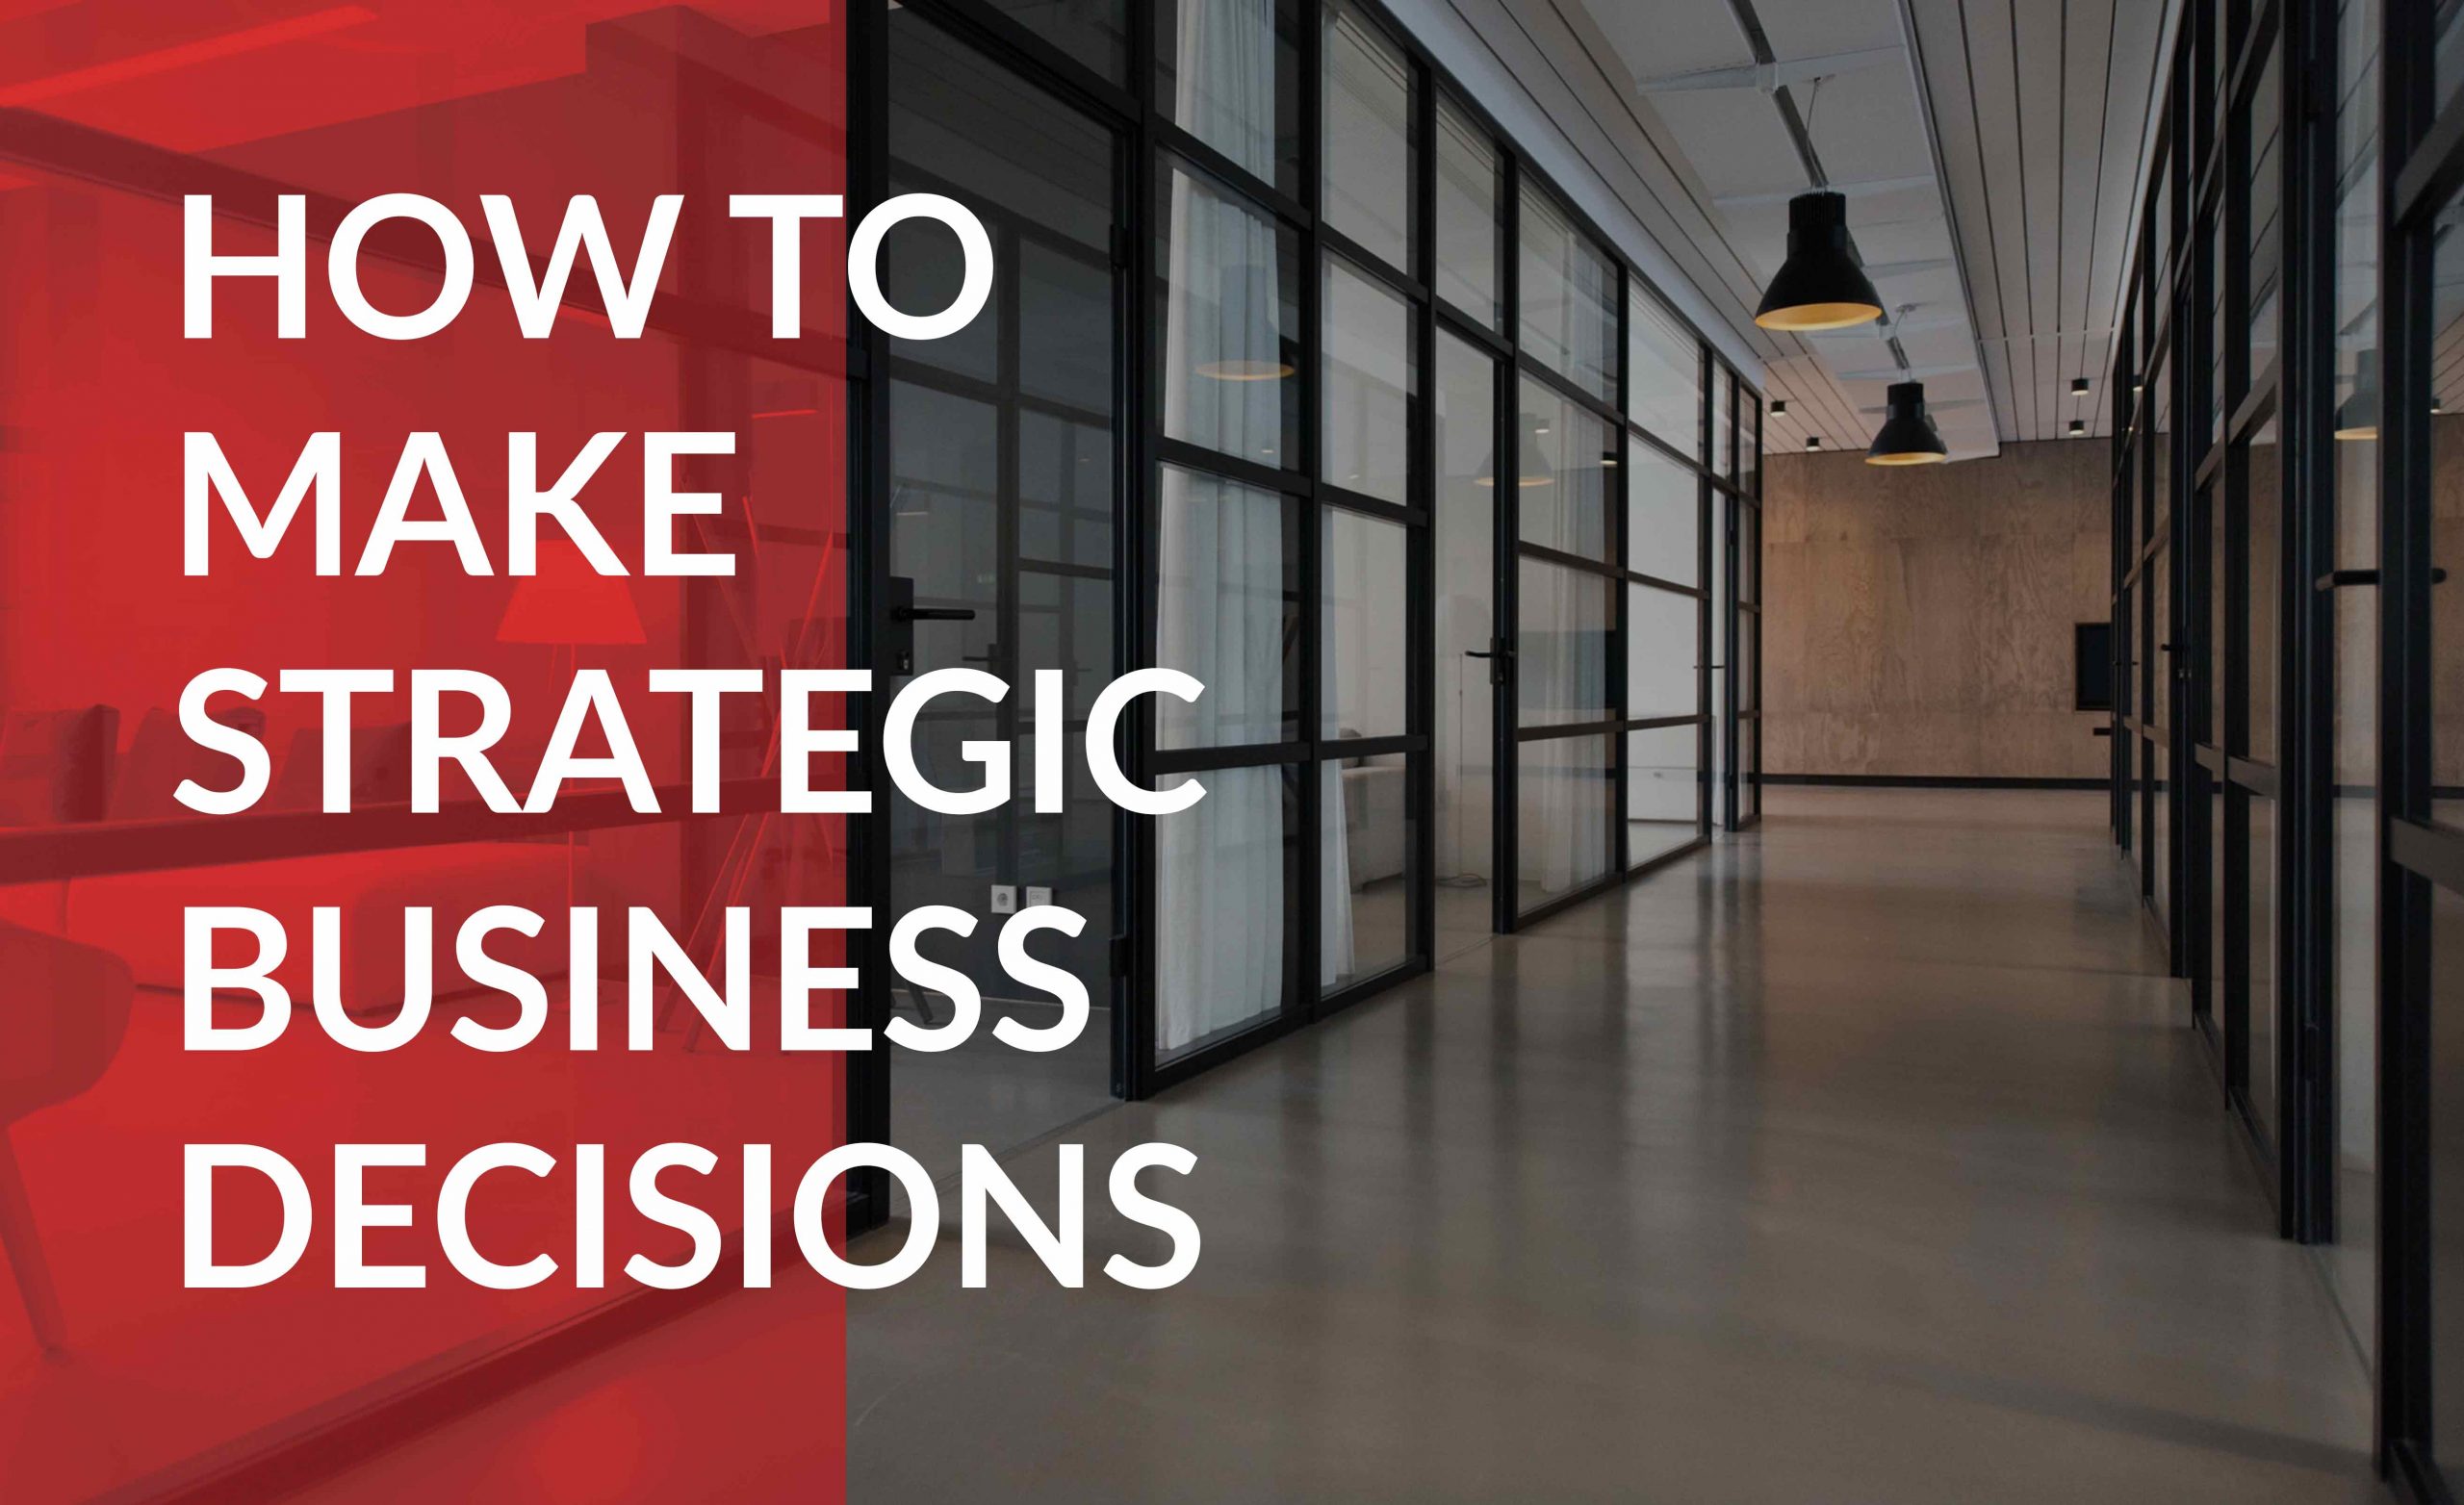 Make strategic business decisions